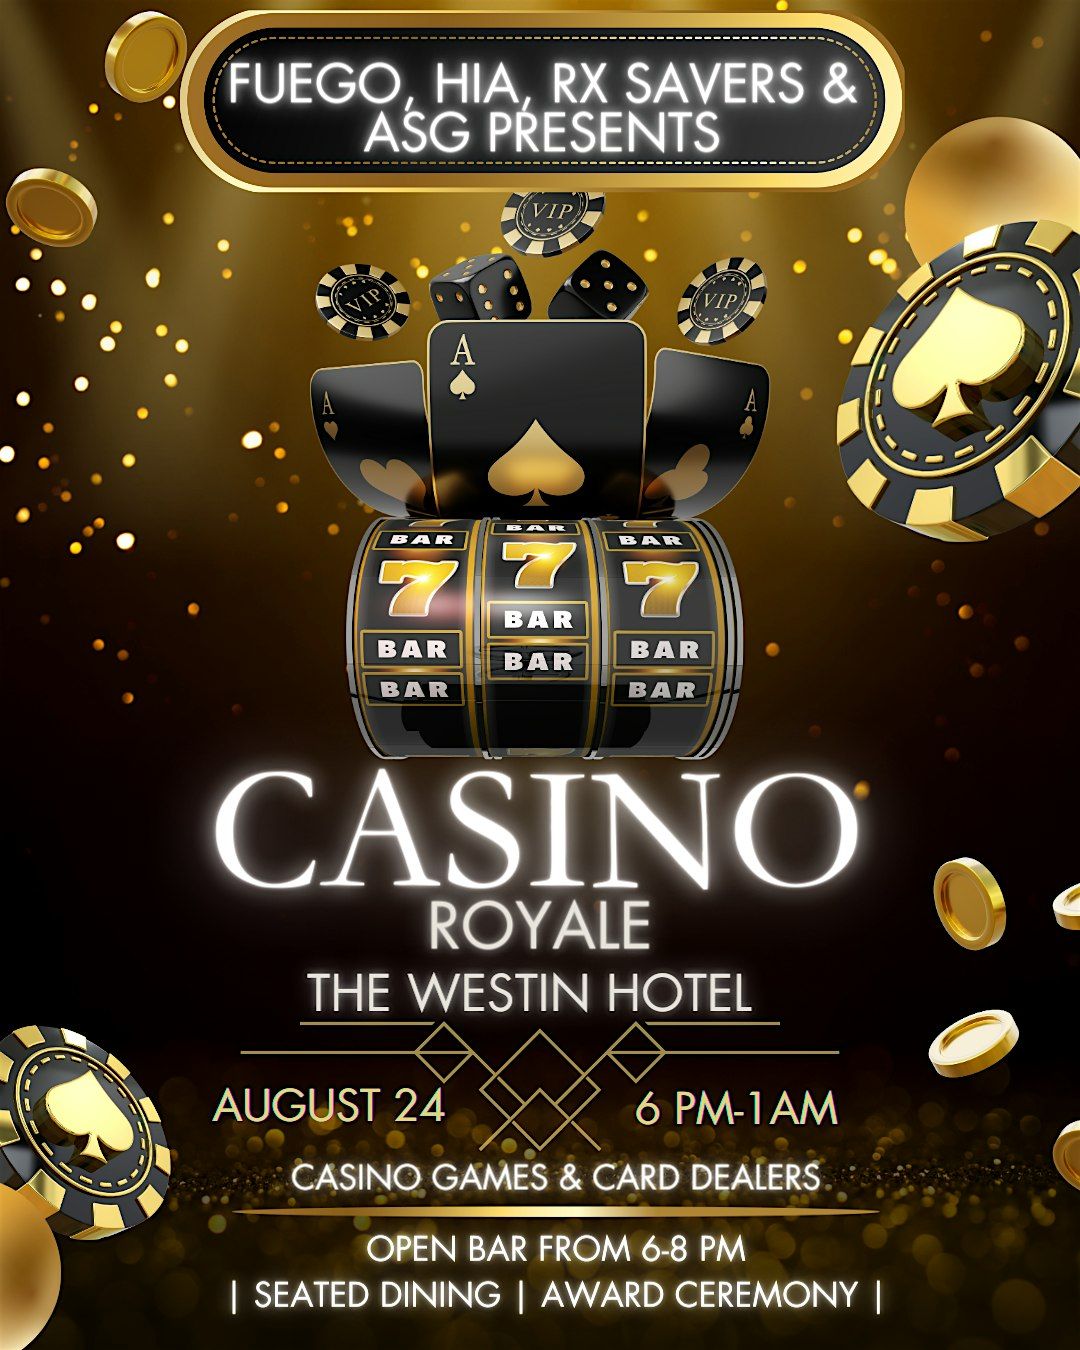 HIA, Fuego, Rx Savers & ASG Presents Casino Royale Awards Ceremony